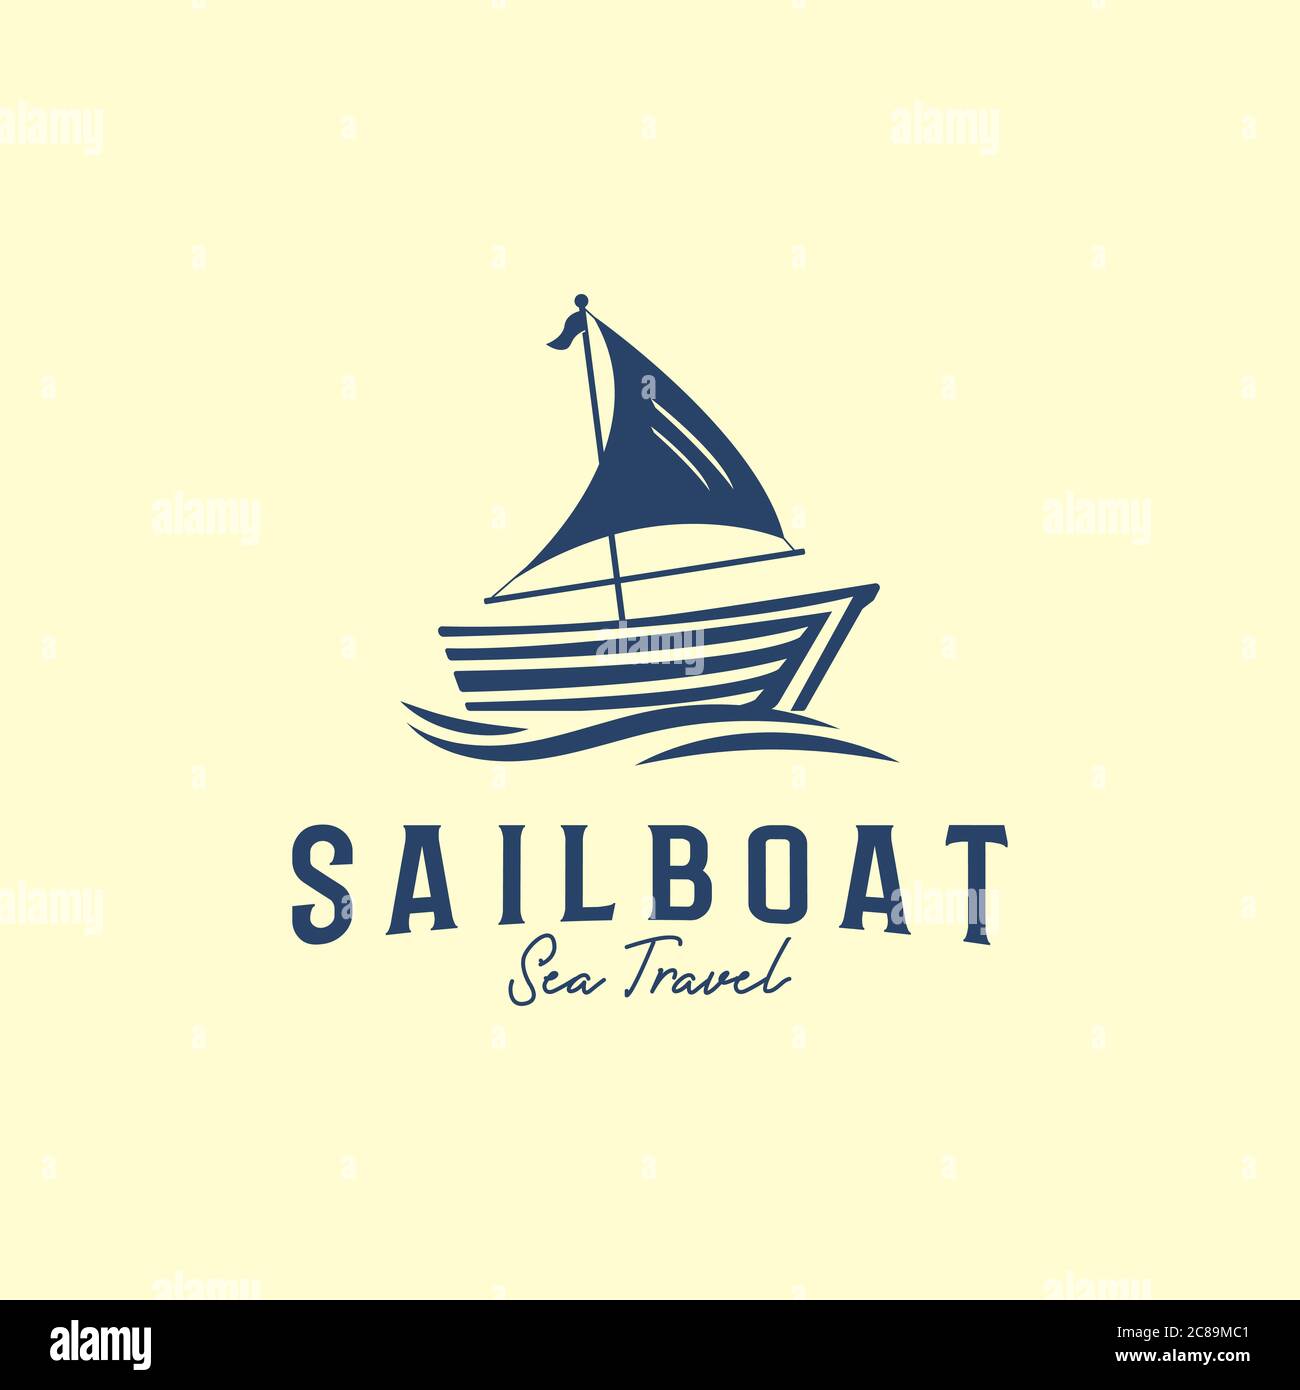 Wood sailboat logo designs template, Yacht sea travel logo icon and symbol Stock Vector